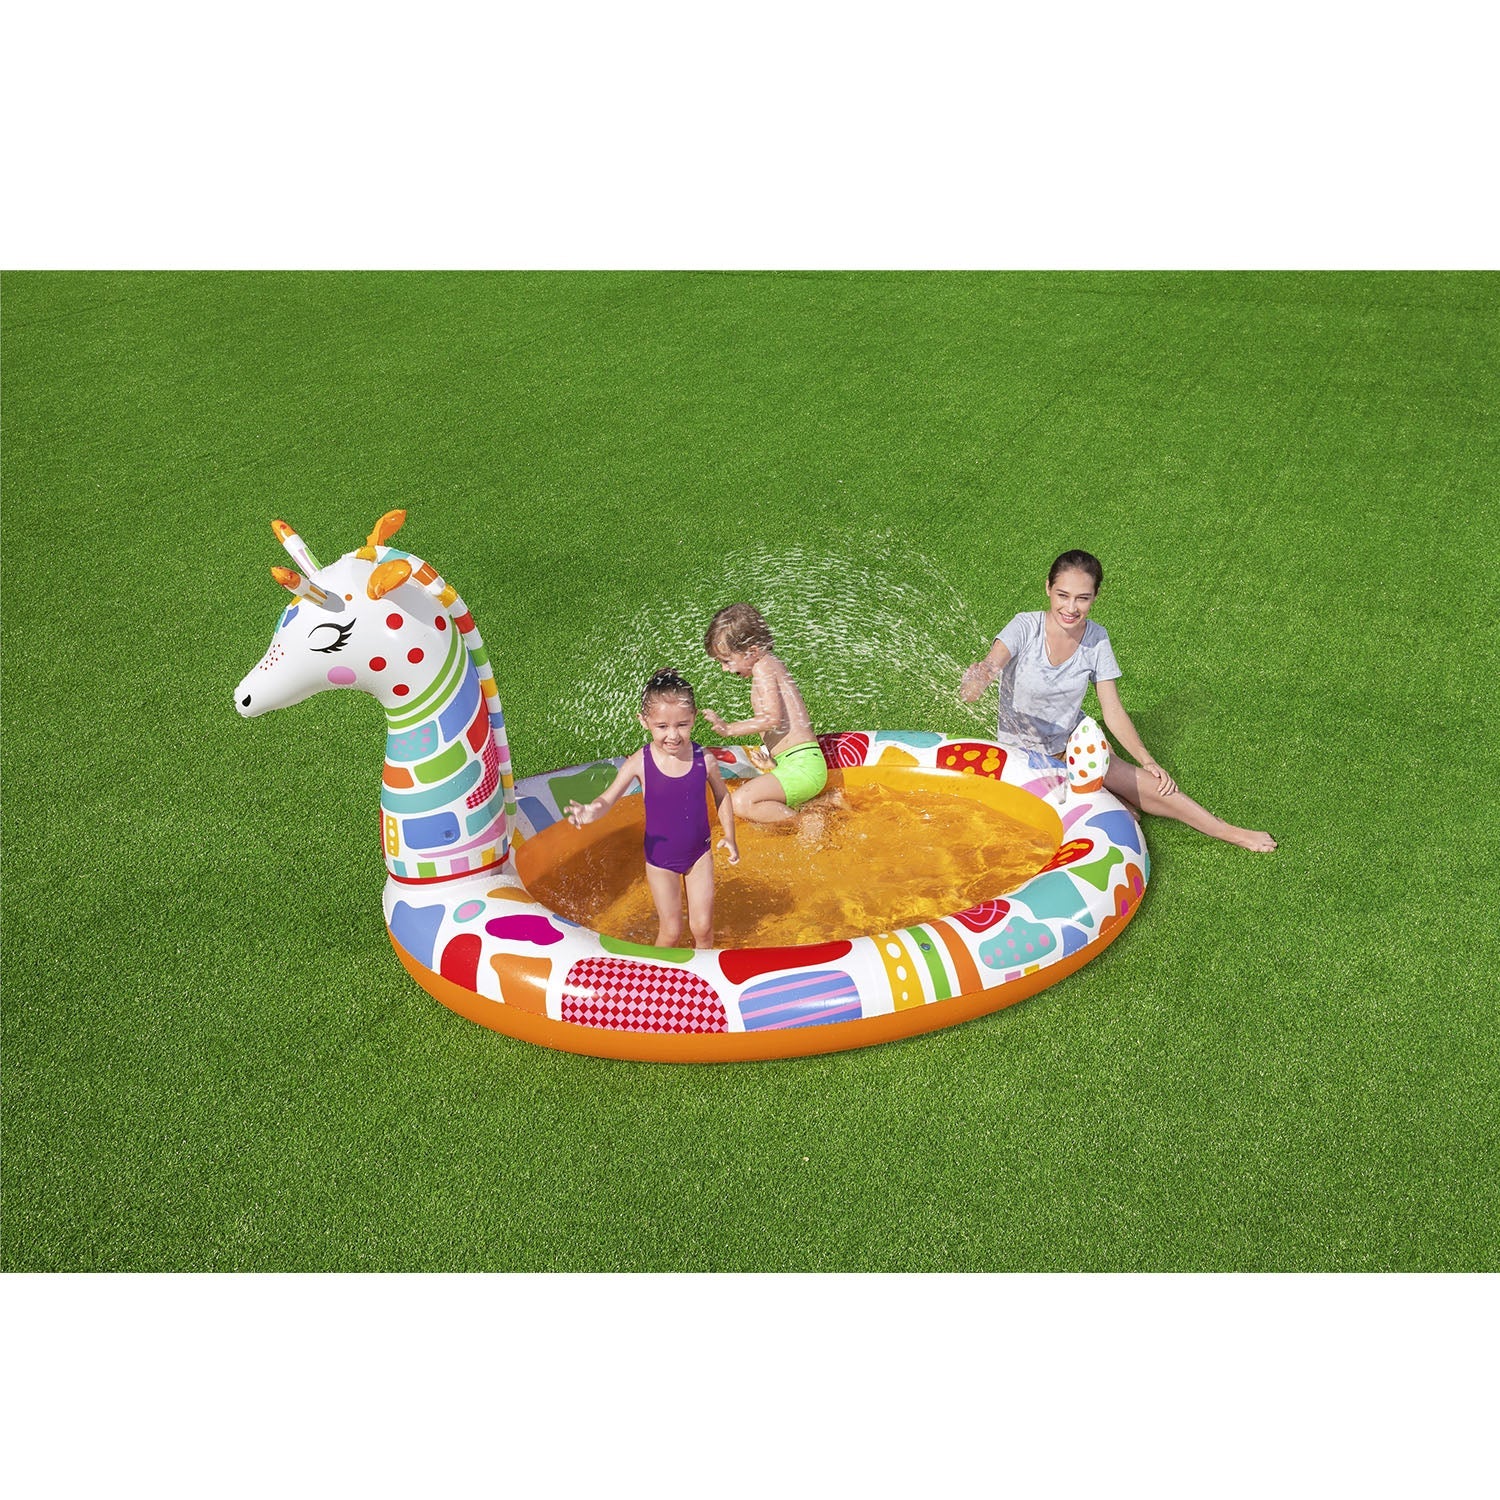 H2OGO! Groovy Giraffe Inflatable Play Pool For Kids, inflatable kiddie pool, small kiddie pool, swimming pool for backyard, swimming pool for kids, portable swimming pool, easy inflate swimming pool, H2OGO! pools for kids, above ground inflatable swimming pool 